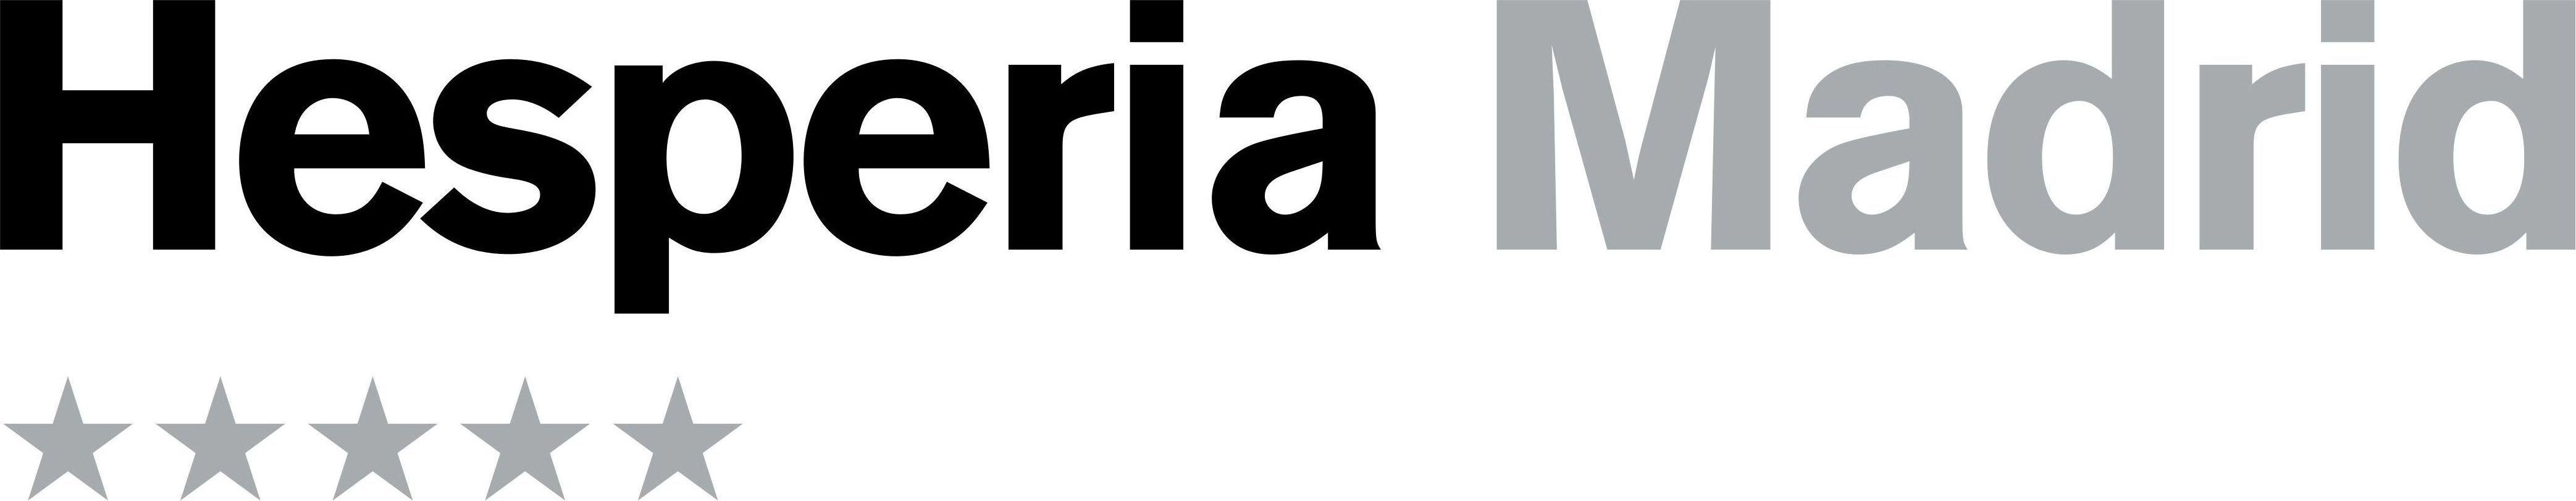 Hesperia Logo - logo hesperia madrid - Madrid Convention Bureau (en)